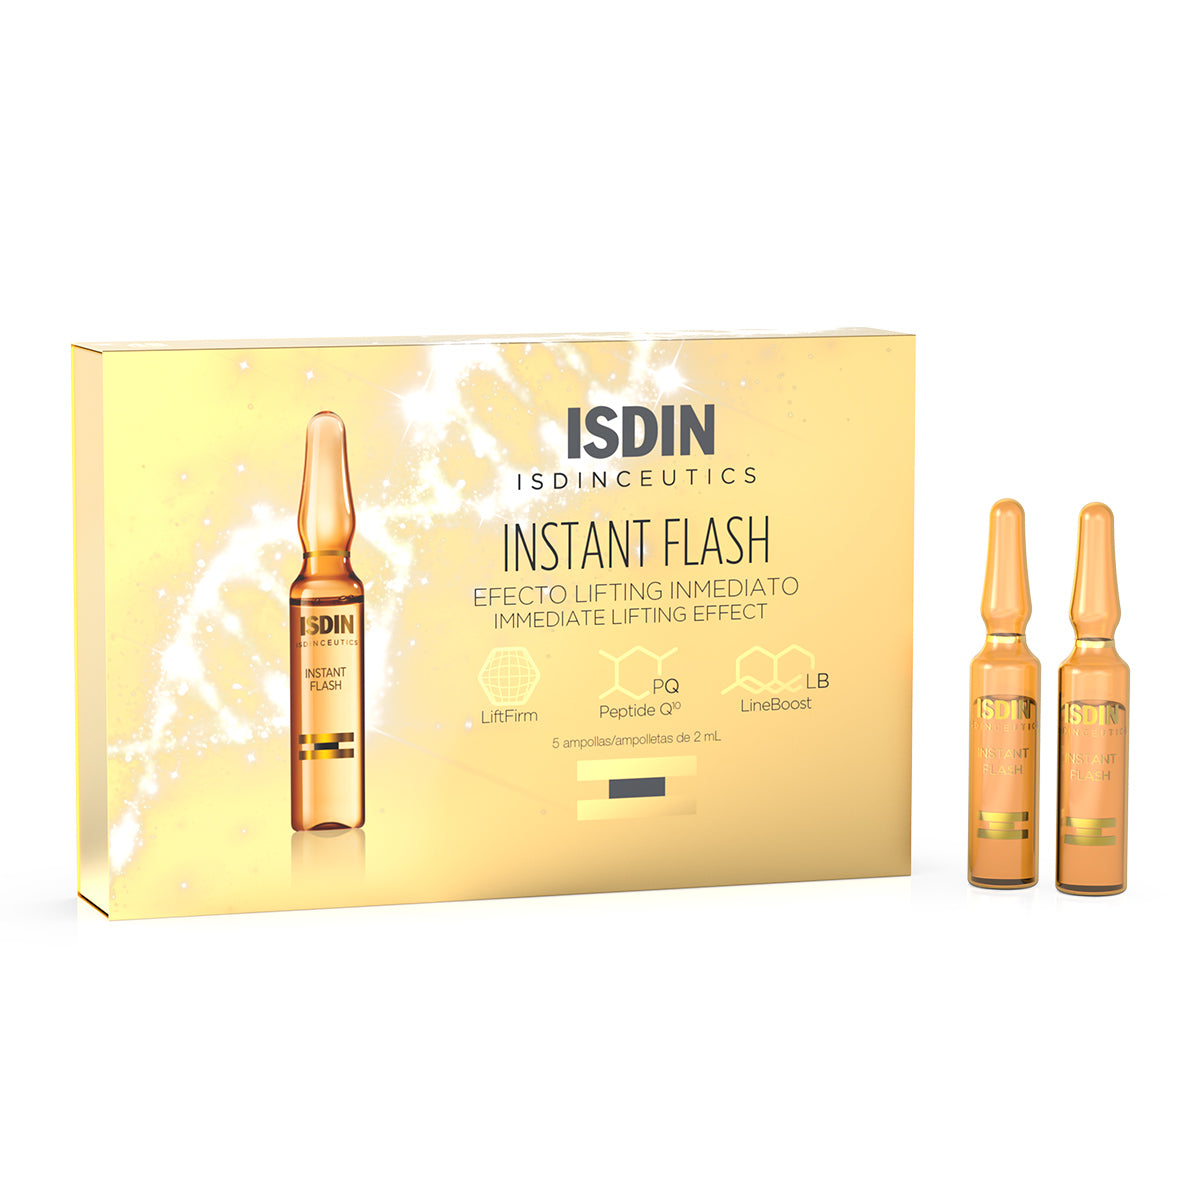 Isdin Isdinceutics Instant Flash, efecto lifting inmediato c/5 ampolletas.